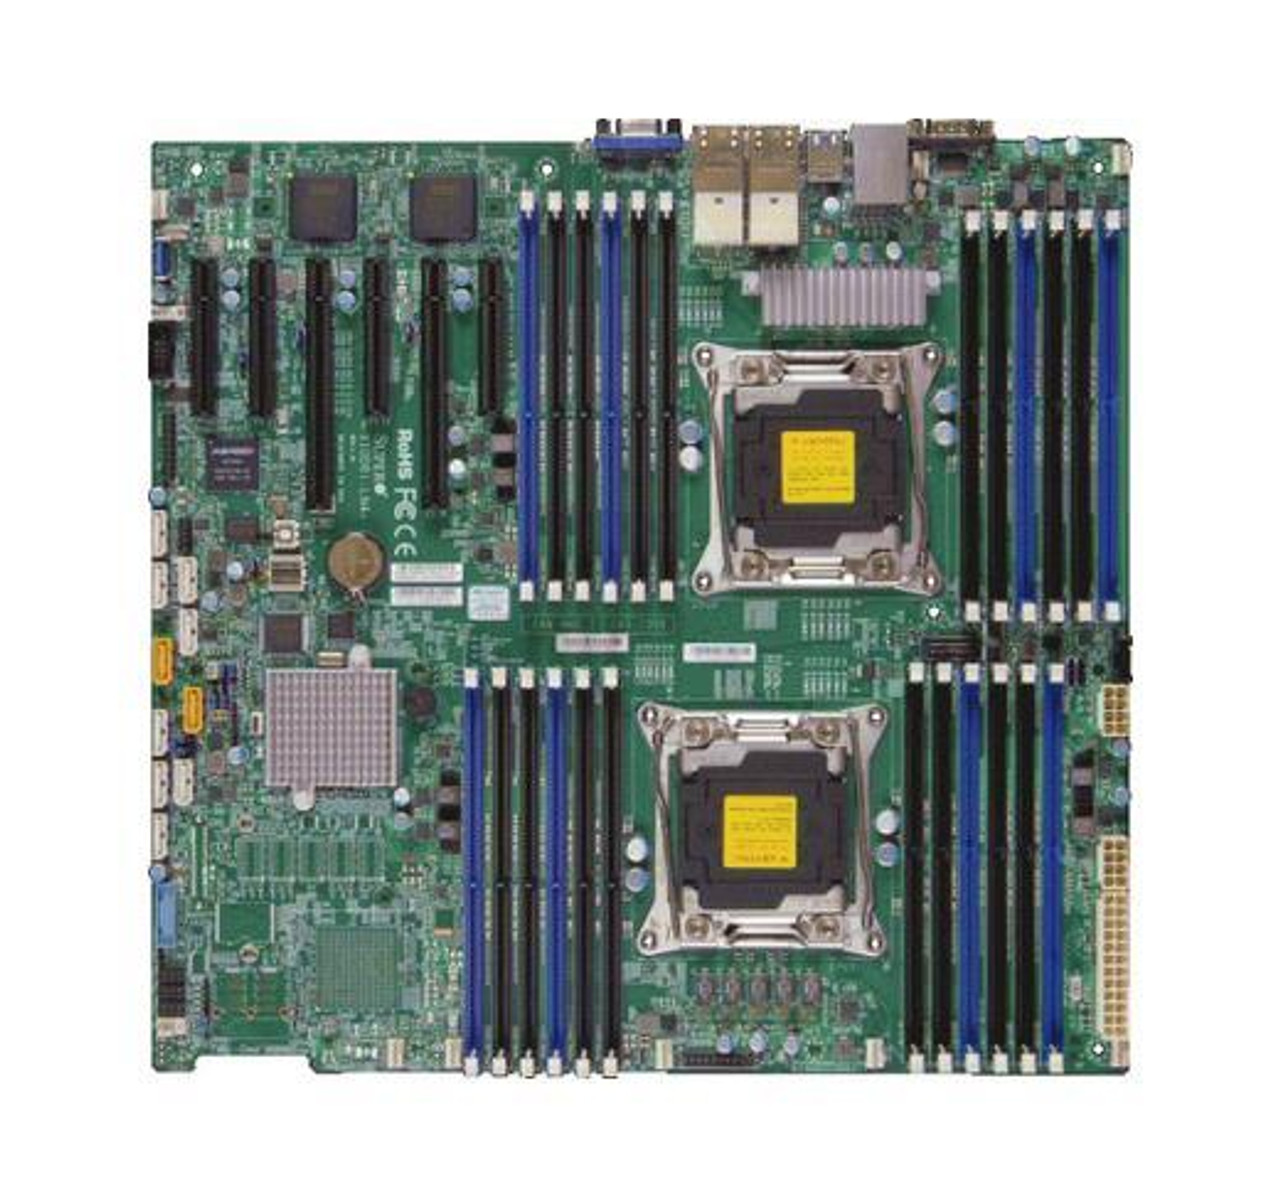 X10DRILN4B SuperMicro Dual Socket R3 LGA 2011 Xeon E5-2600 v4 / v3 Intel C612 Chipset DDR4 24 x DIMM 10 x SATA 6Gbps EE-ATX Server Motherboard (Refurbished)